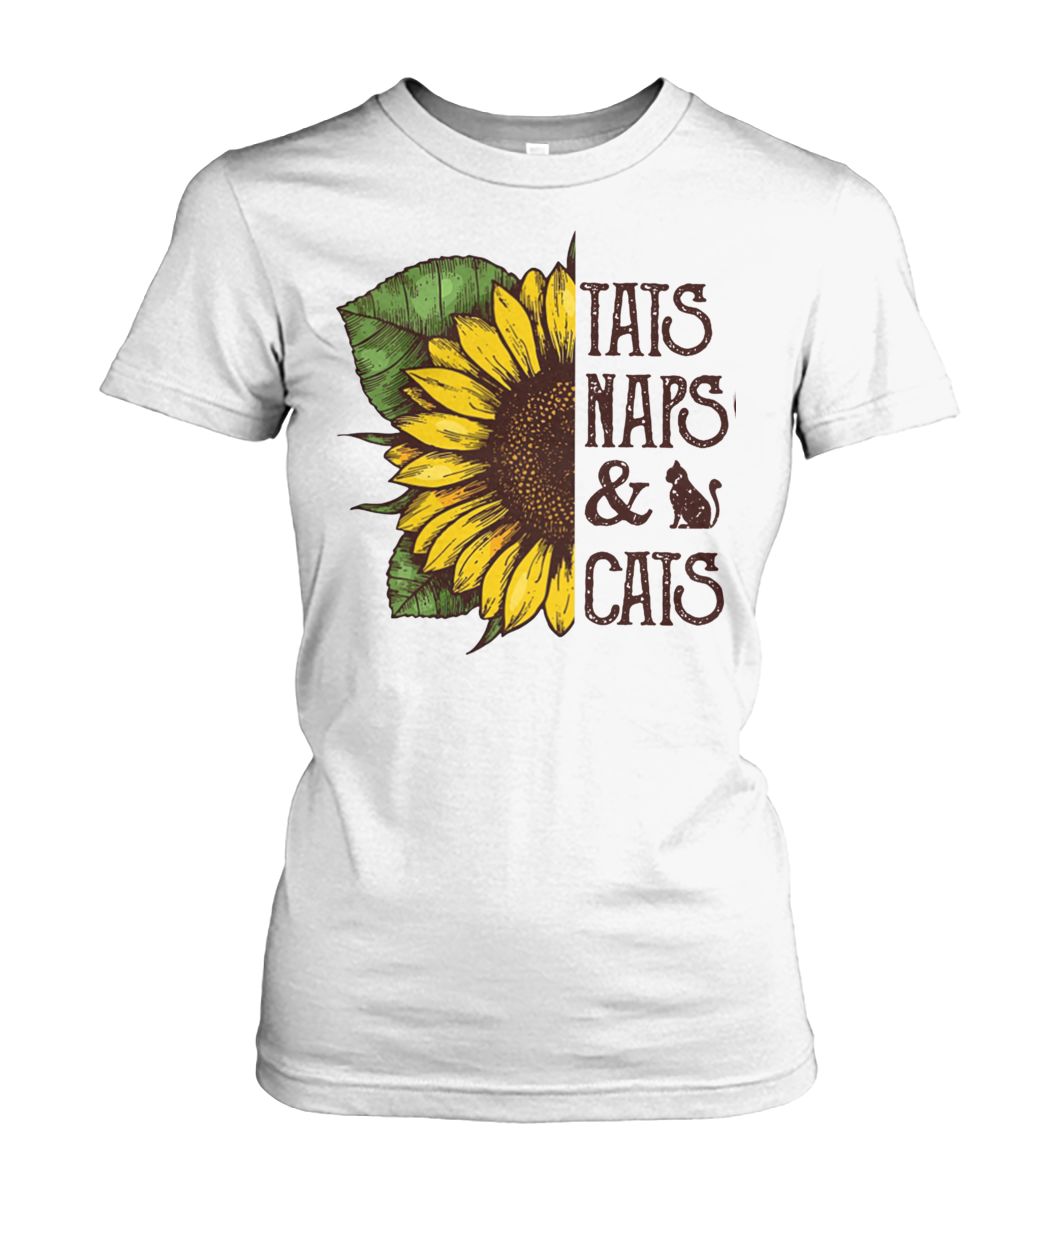 Sunflower tats naps and cats women's crew tee